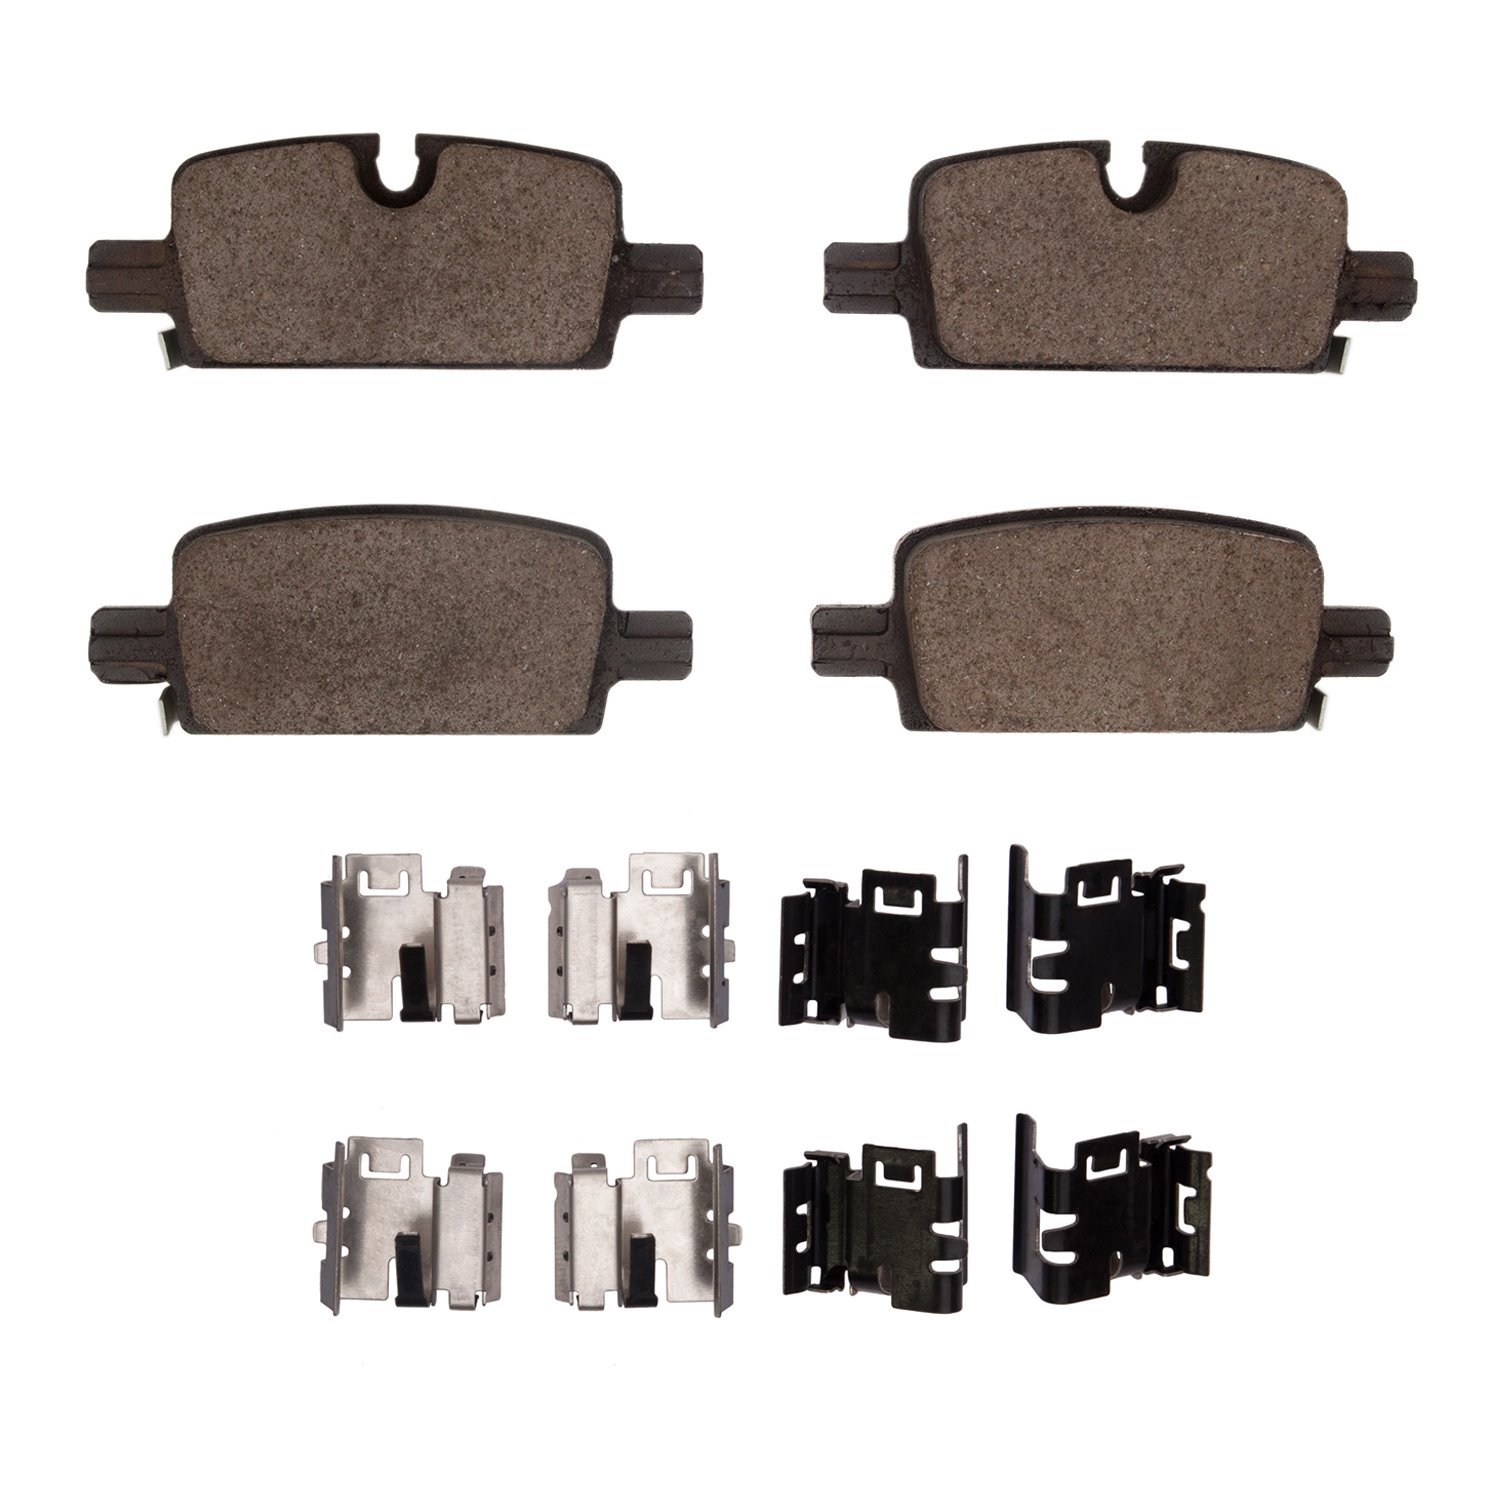 1400-2174-01 Ultimate-Duty Brake Pads & Hardware Kit, Fits Select Multiple Makes/Models, Position: Rear,Rr